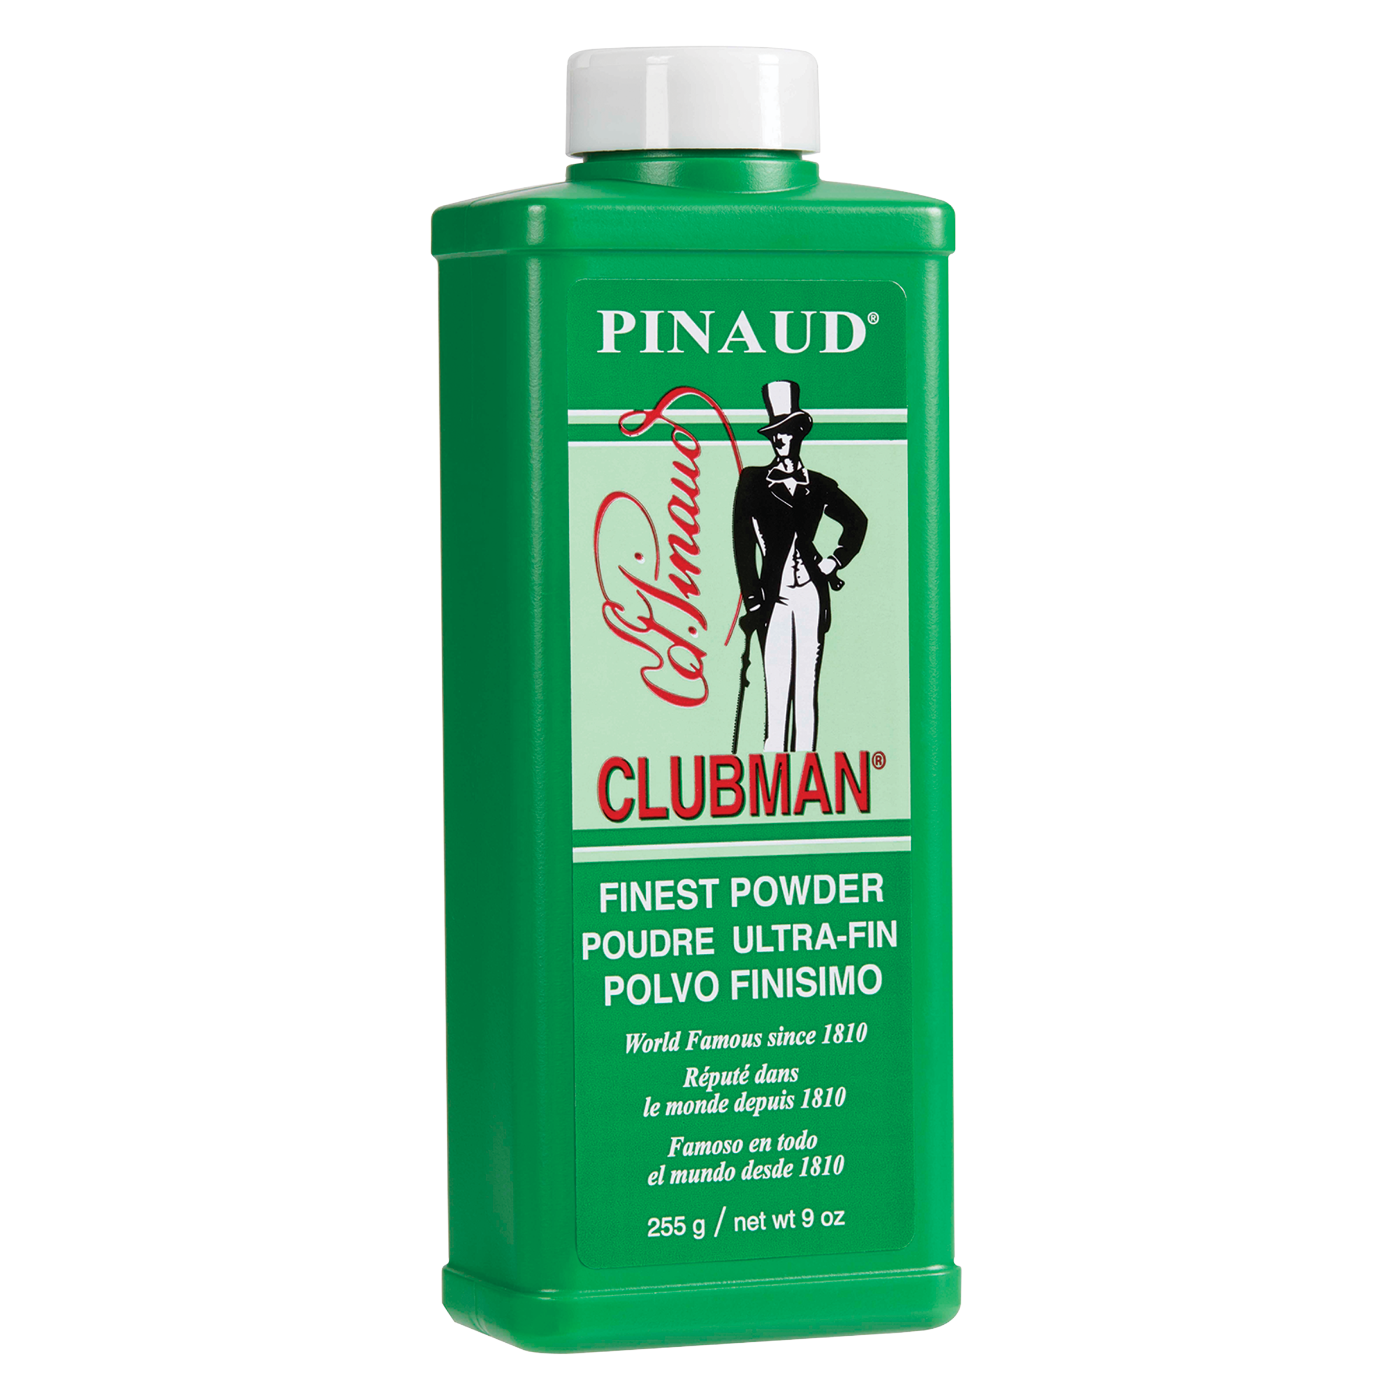 Pinaud Finest Powder